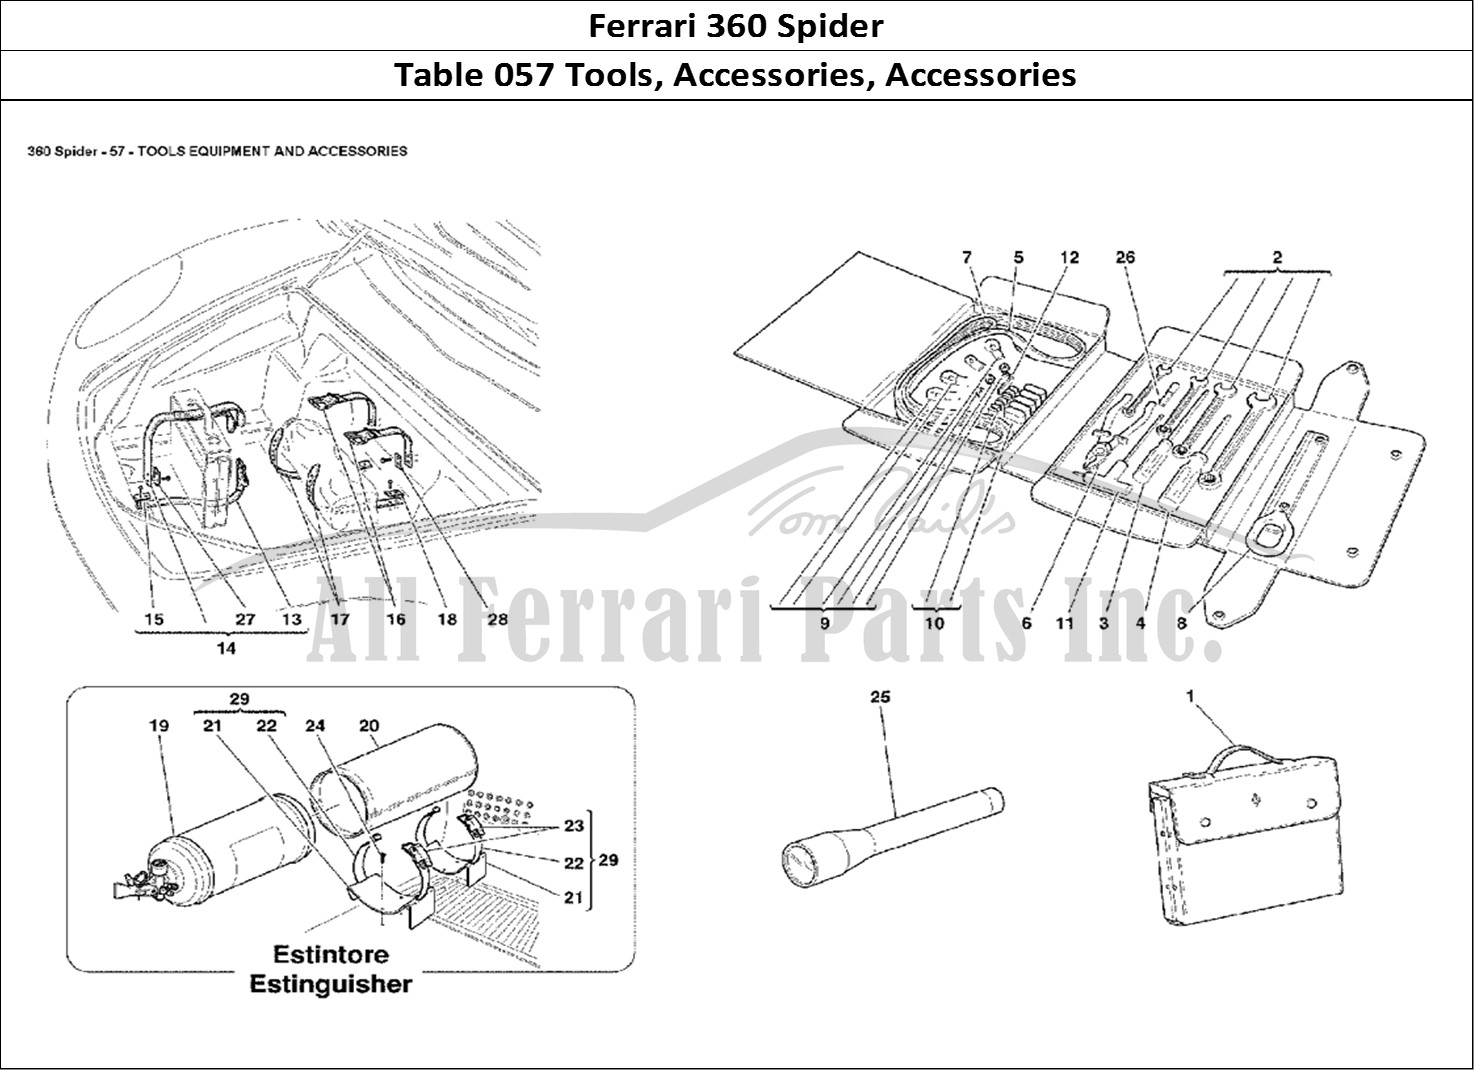 Ferrari Parts Ferrari 360 Spider Page 057 Tools Equipment and Acces